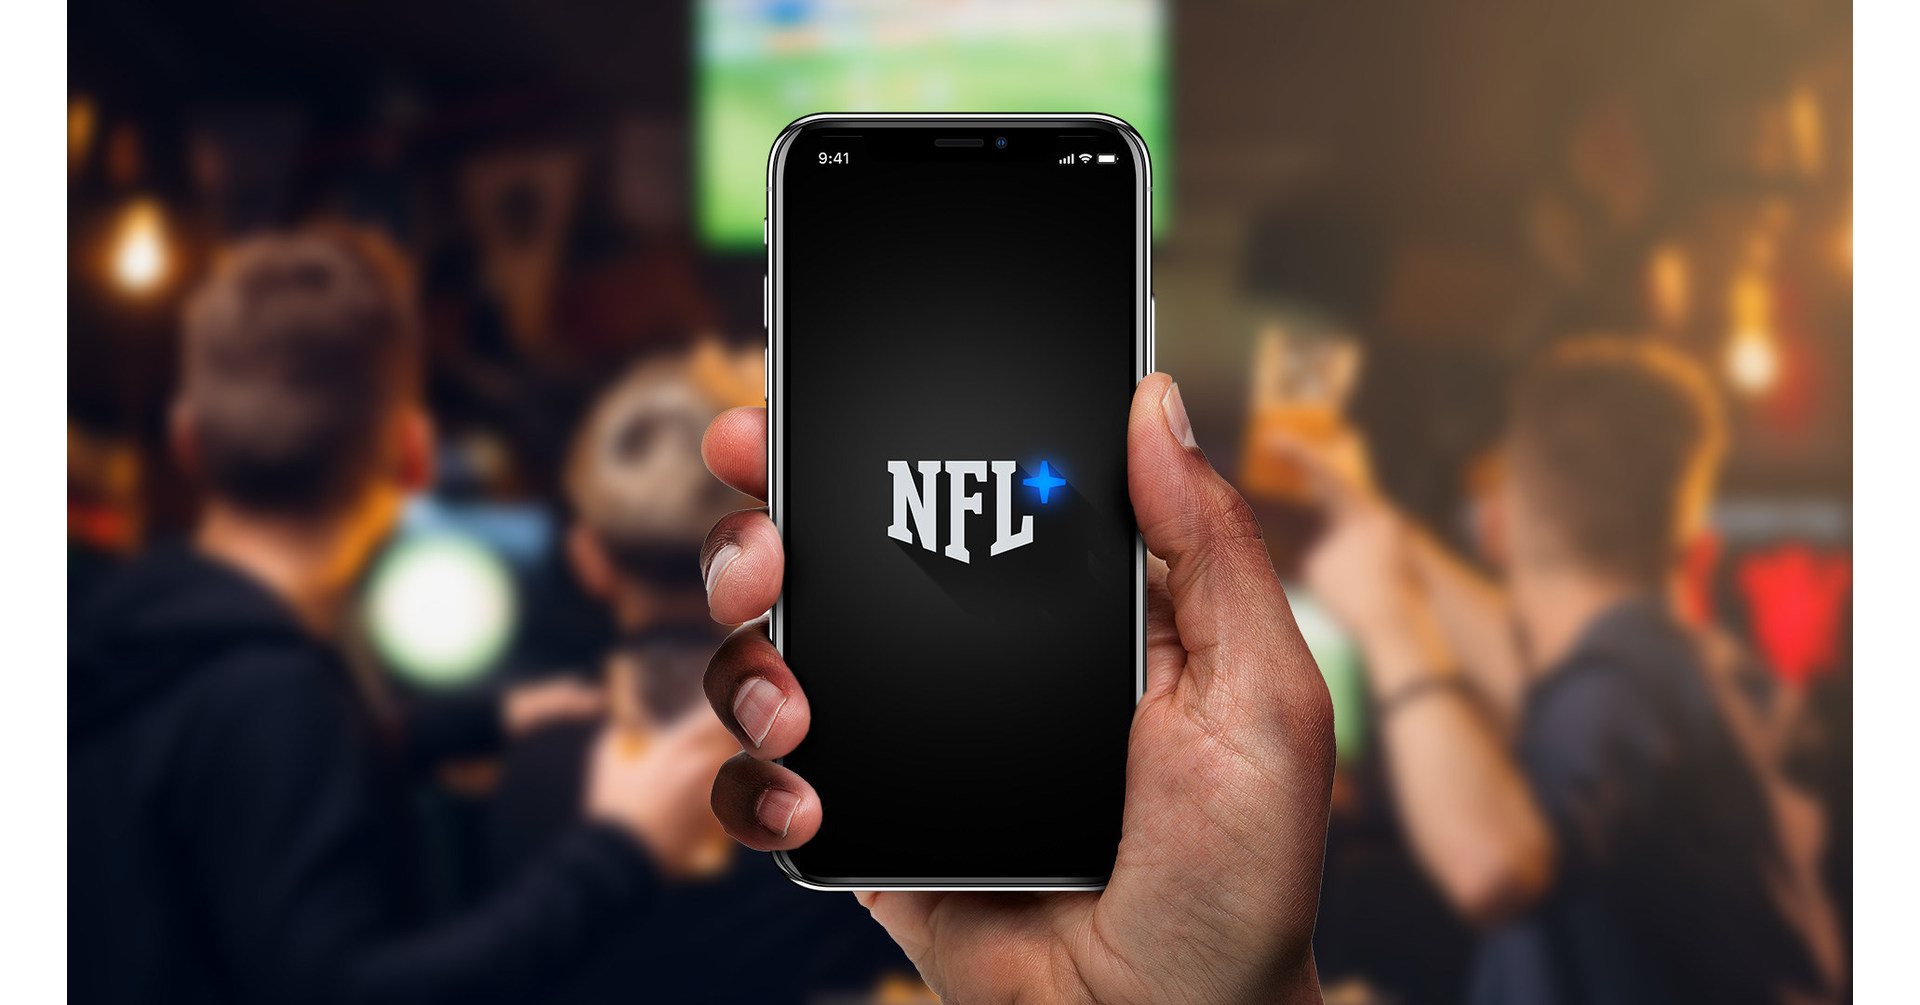 TNF' begins anew on NFL Network - NewscastStudio